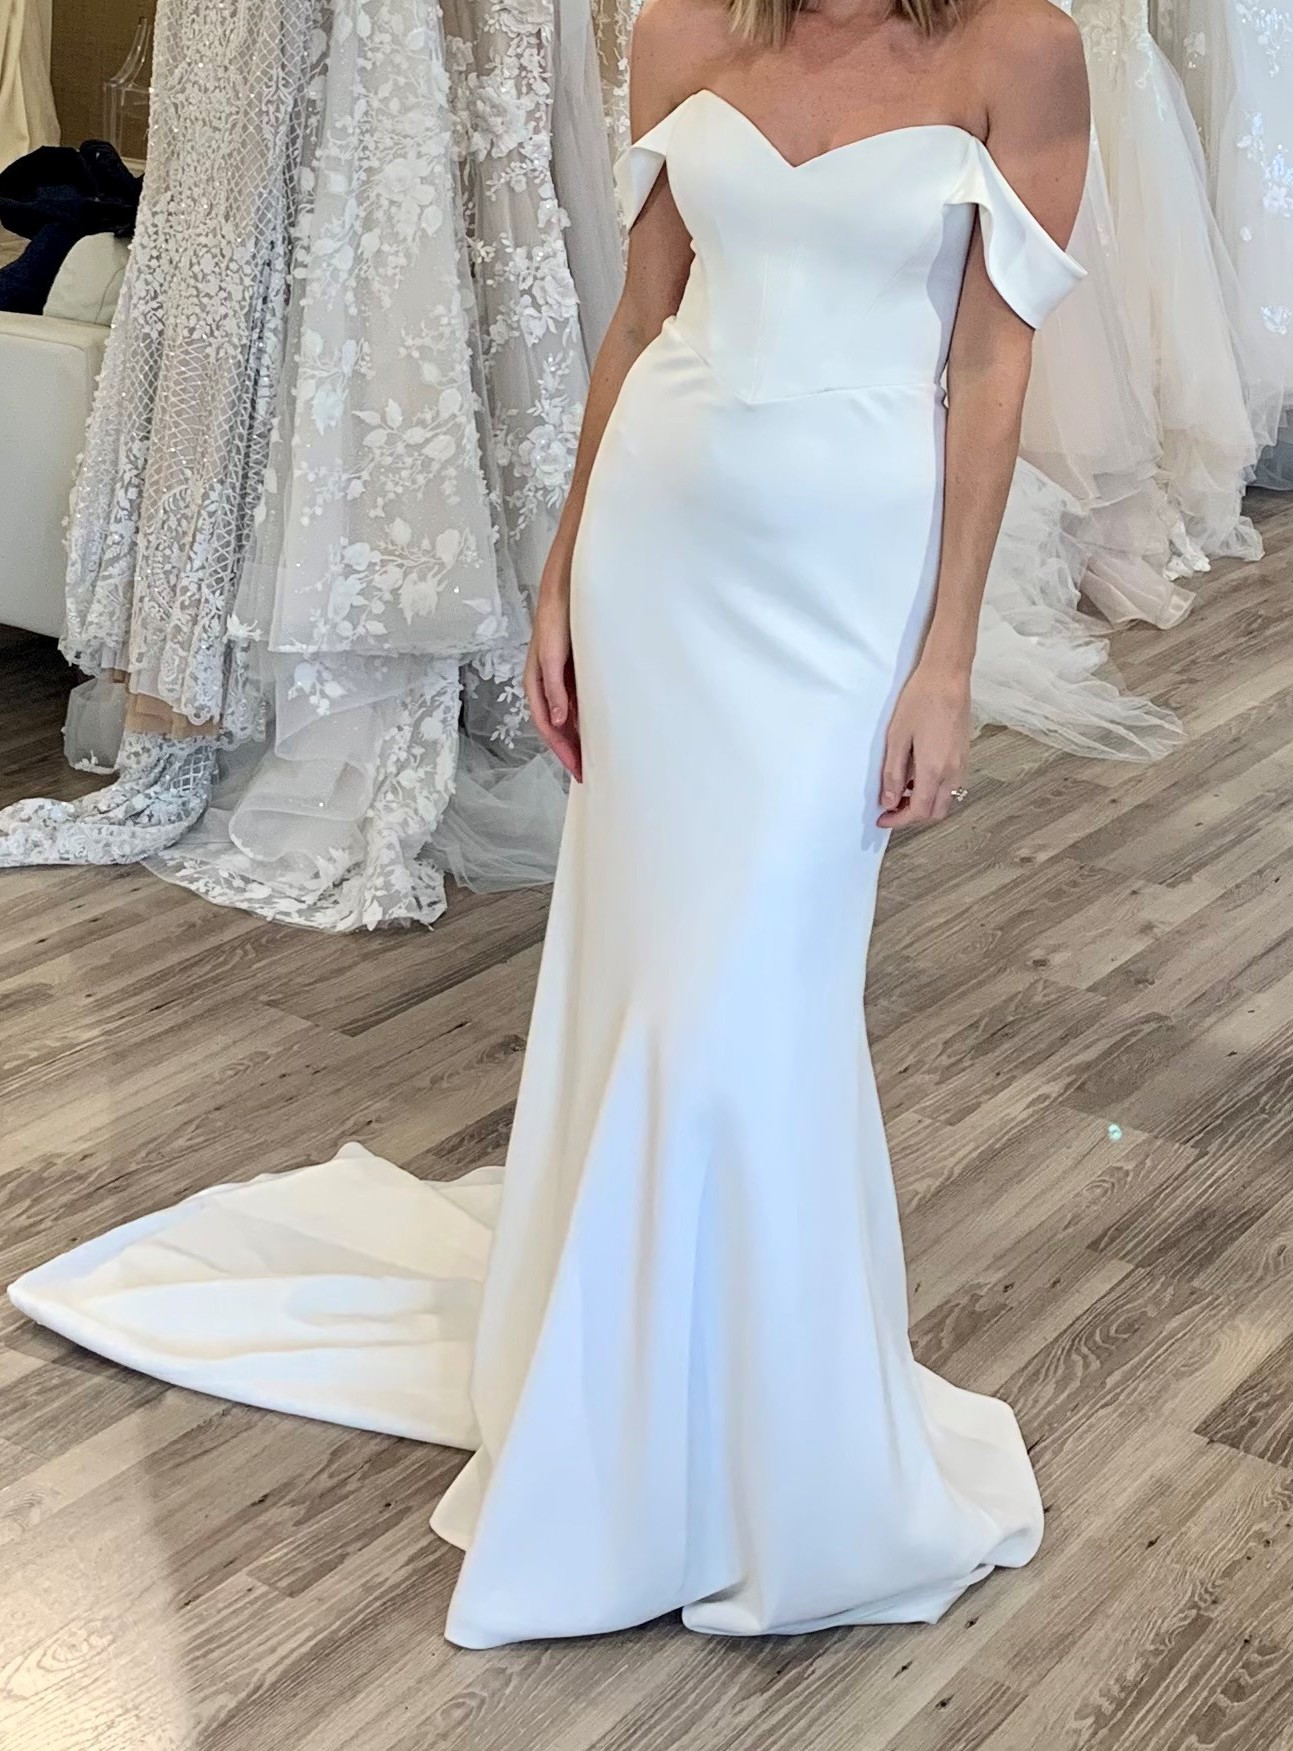 Savannah Miller Winona New Wedding Dress Save 33% - Stillwhite